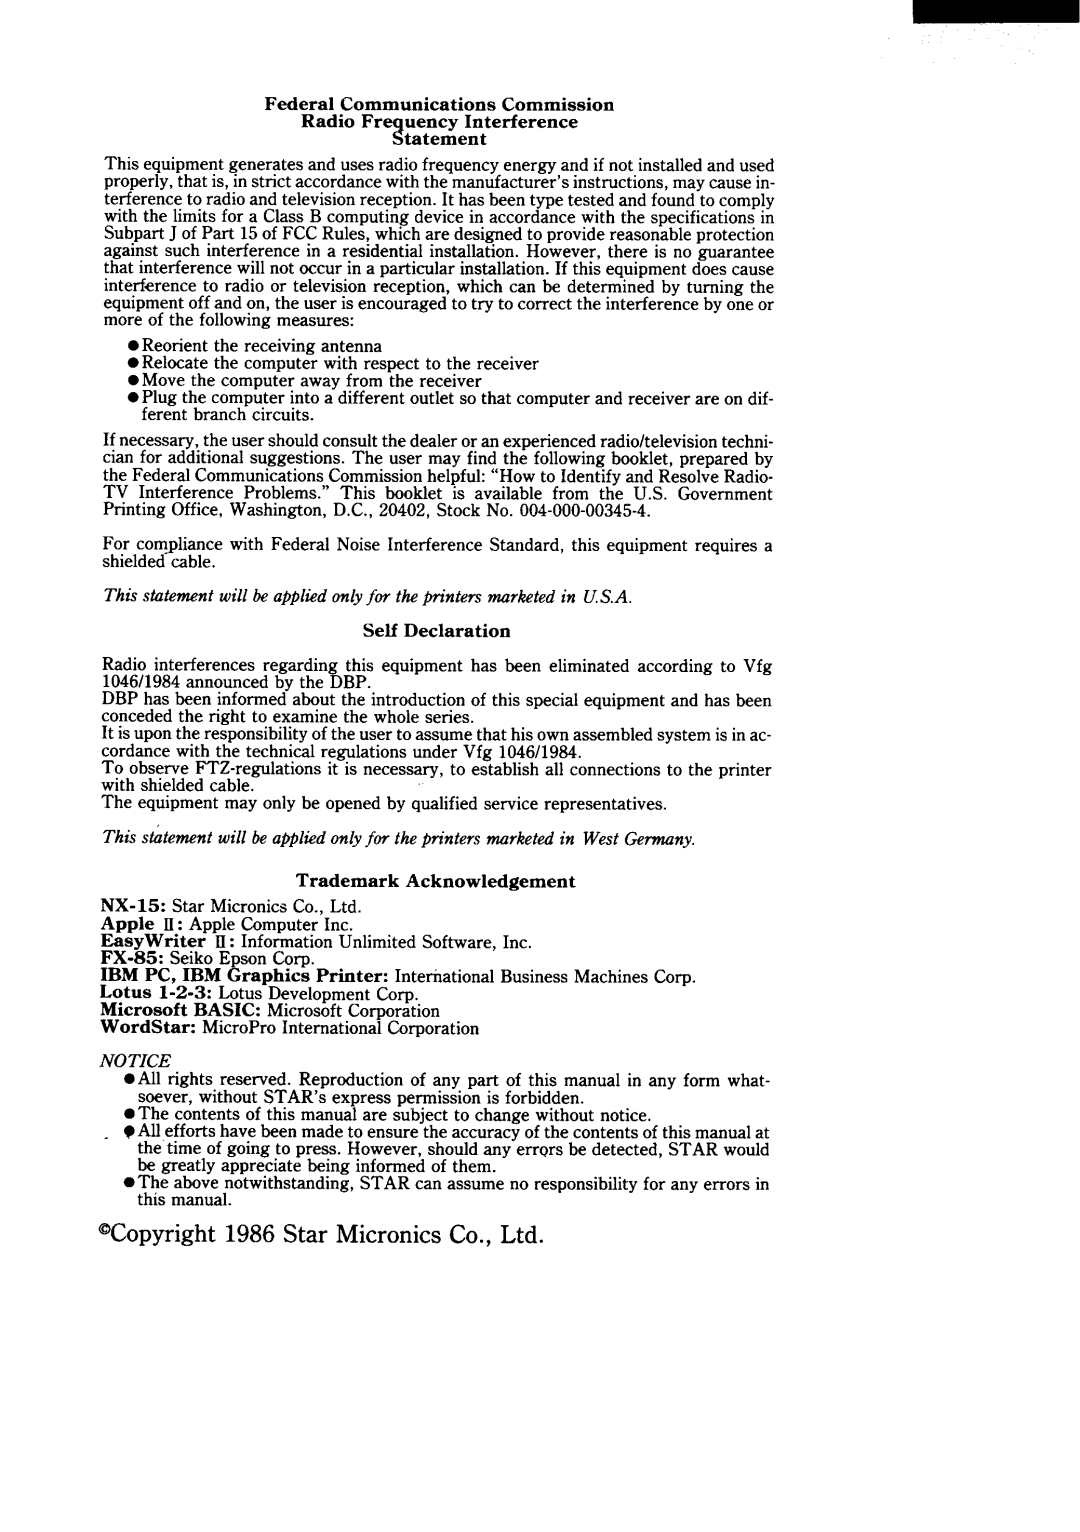 Star Micronics NX-15 user manual FederalCommunicationsCommission RadioFr uencyInterference %tatement, Self Declaration 